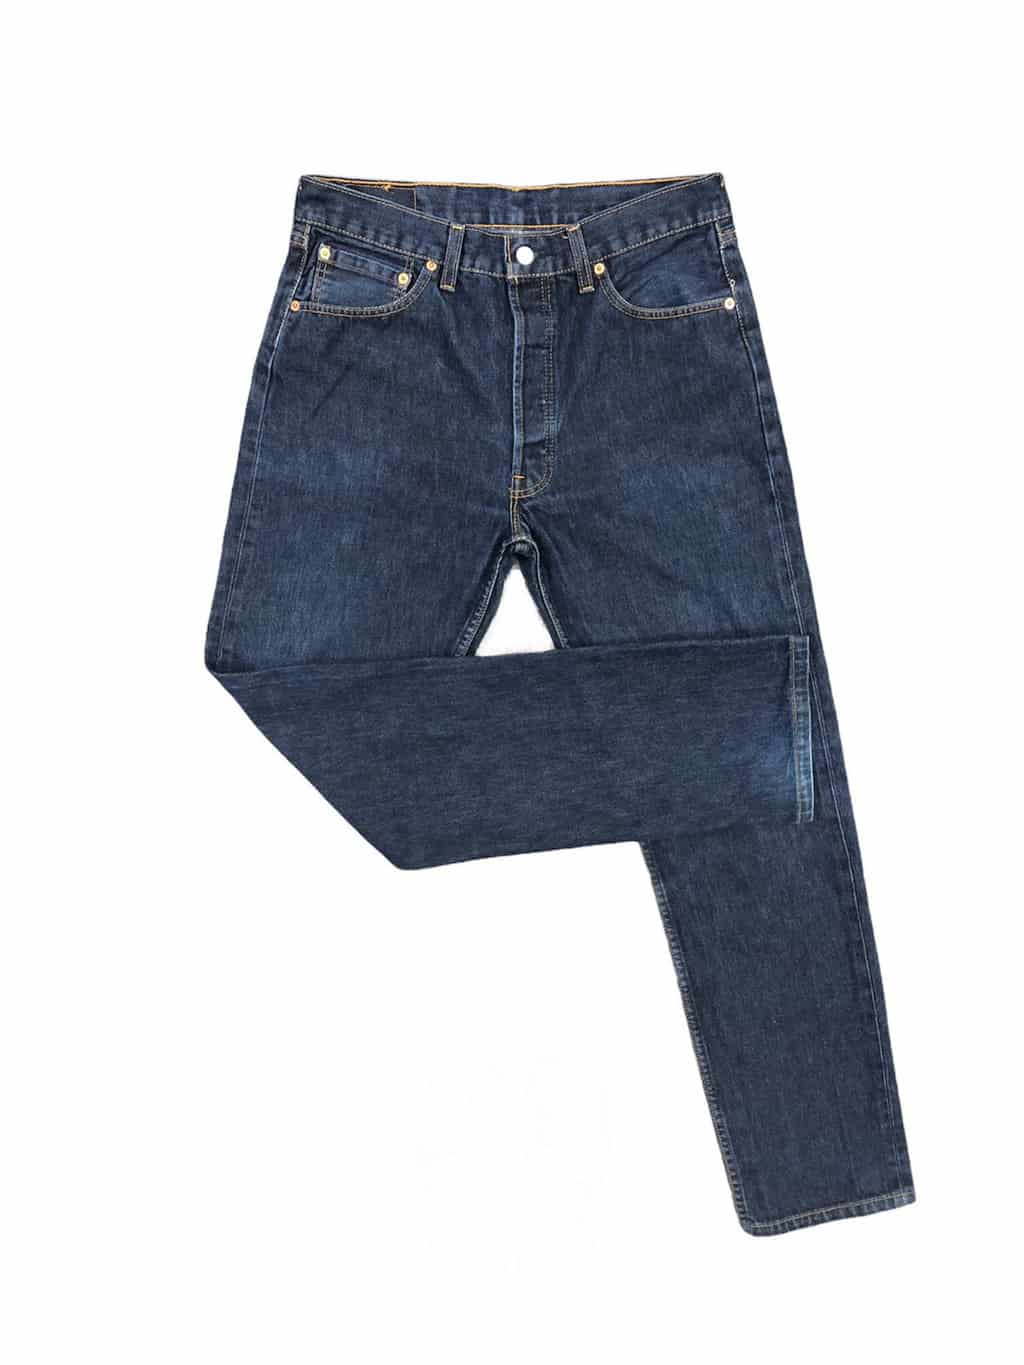 Y2K Dark Blue 501 Levis Jeans - W32 X L33 - St Cyr Vintage